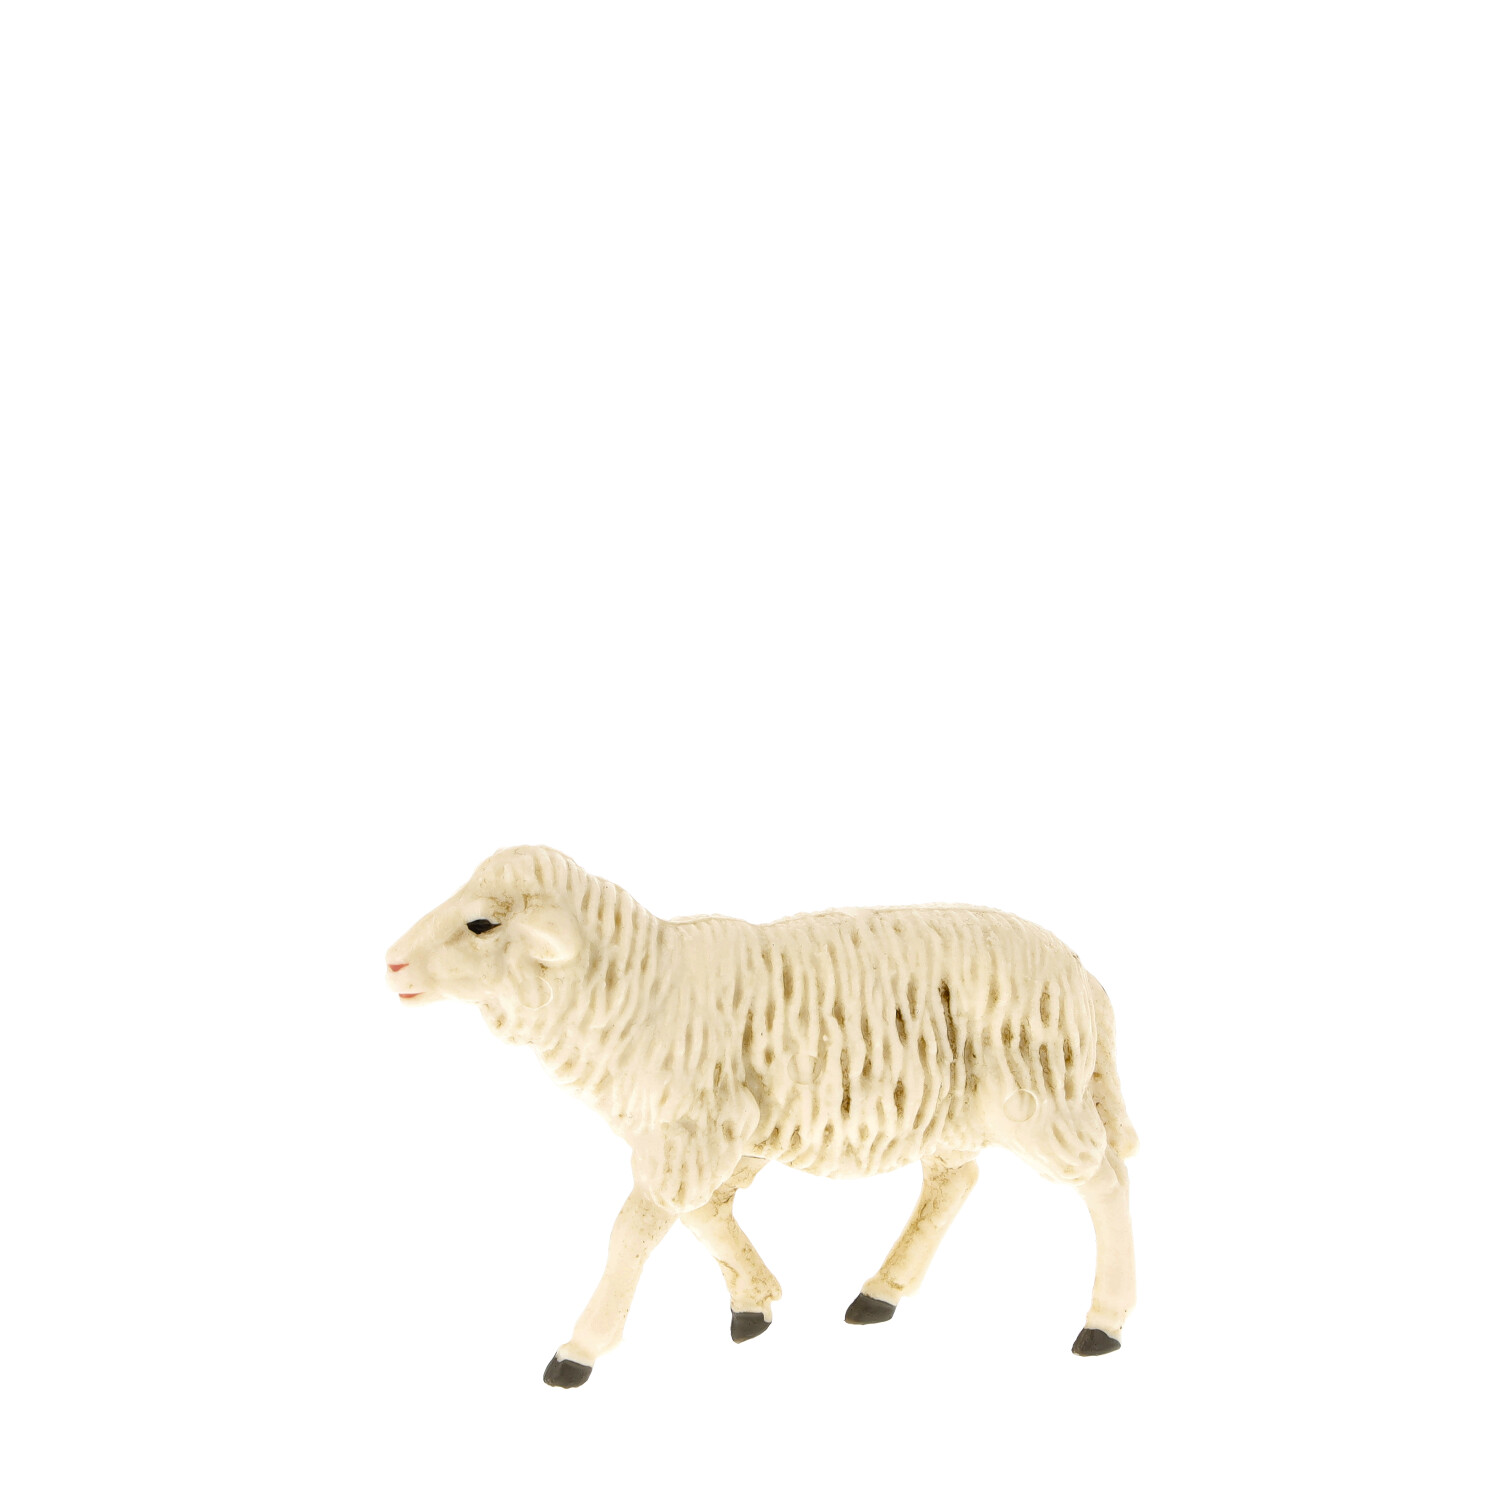 Schaf geradeaus blickend - Marolin Plastik - Krippenfigur aus Kunststoff - made in Germany